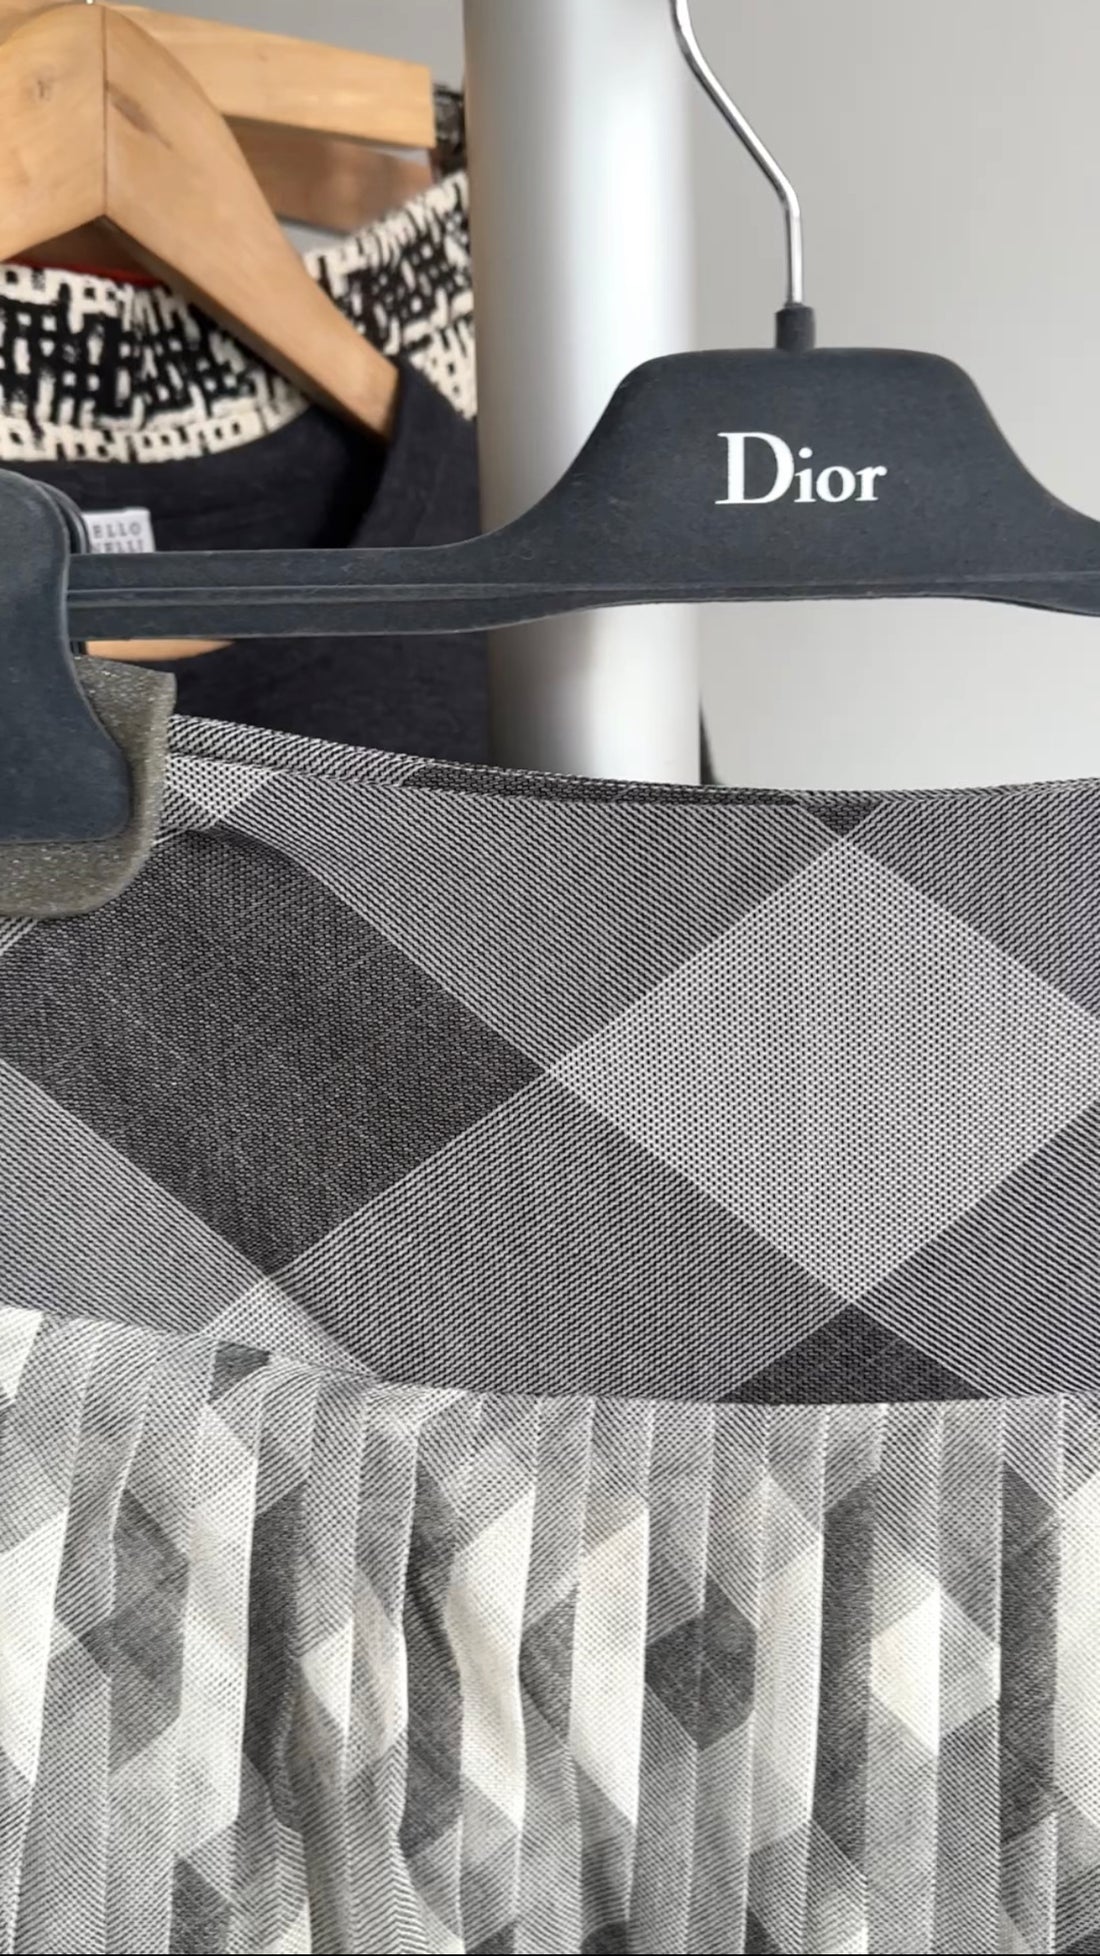 Christian Dior Grey Check Tulle Skirt - 8